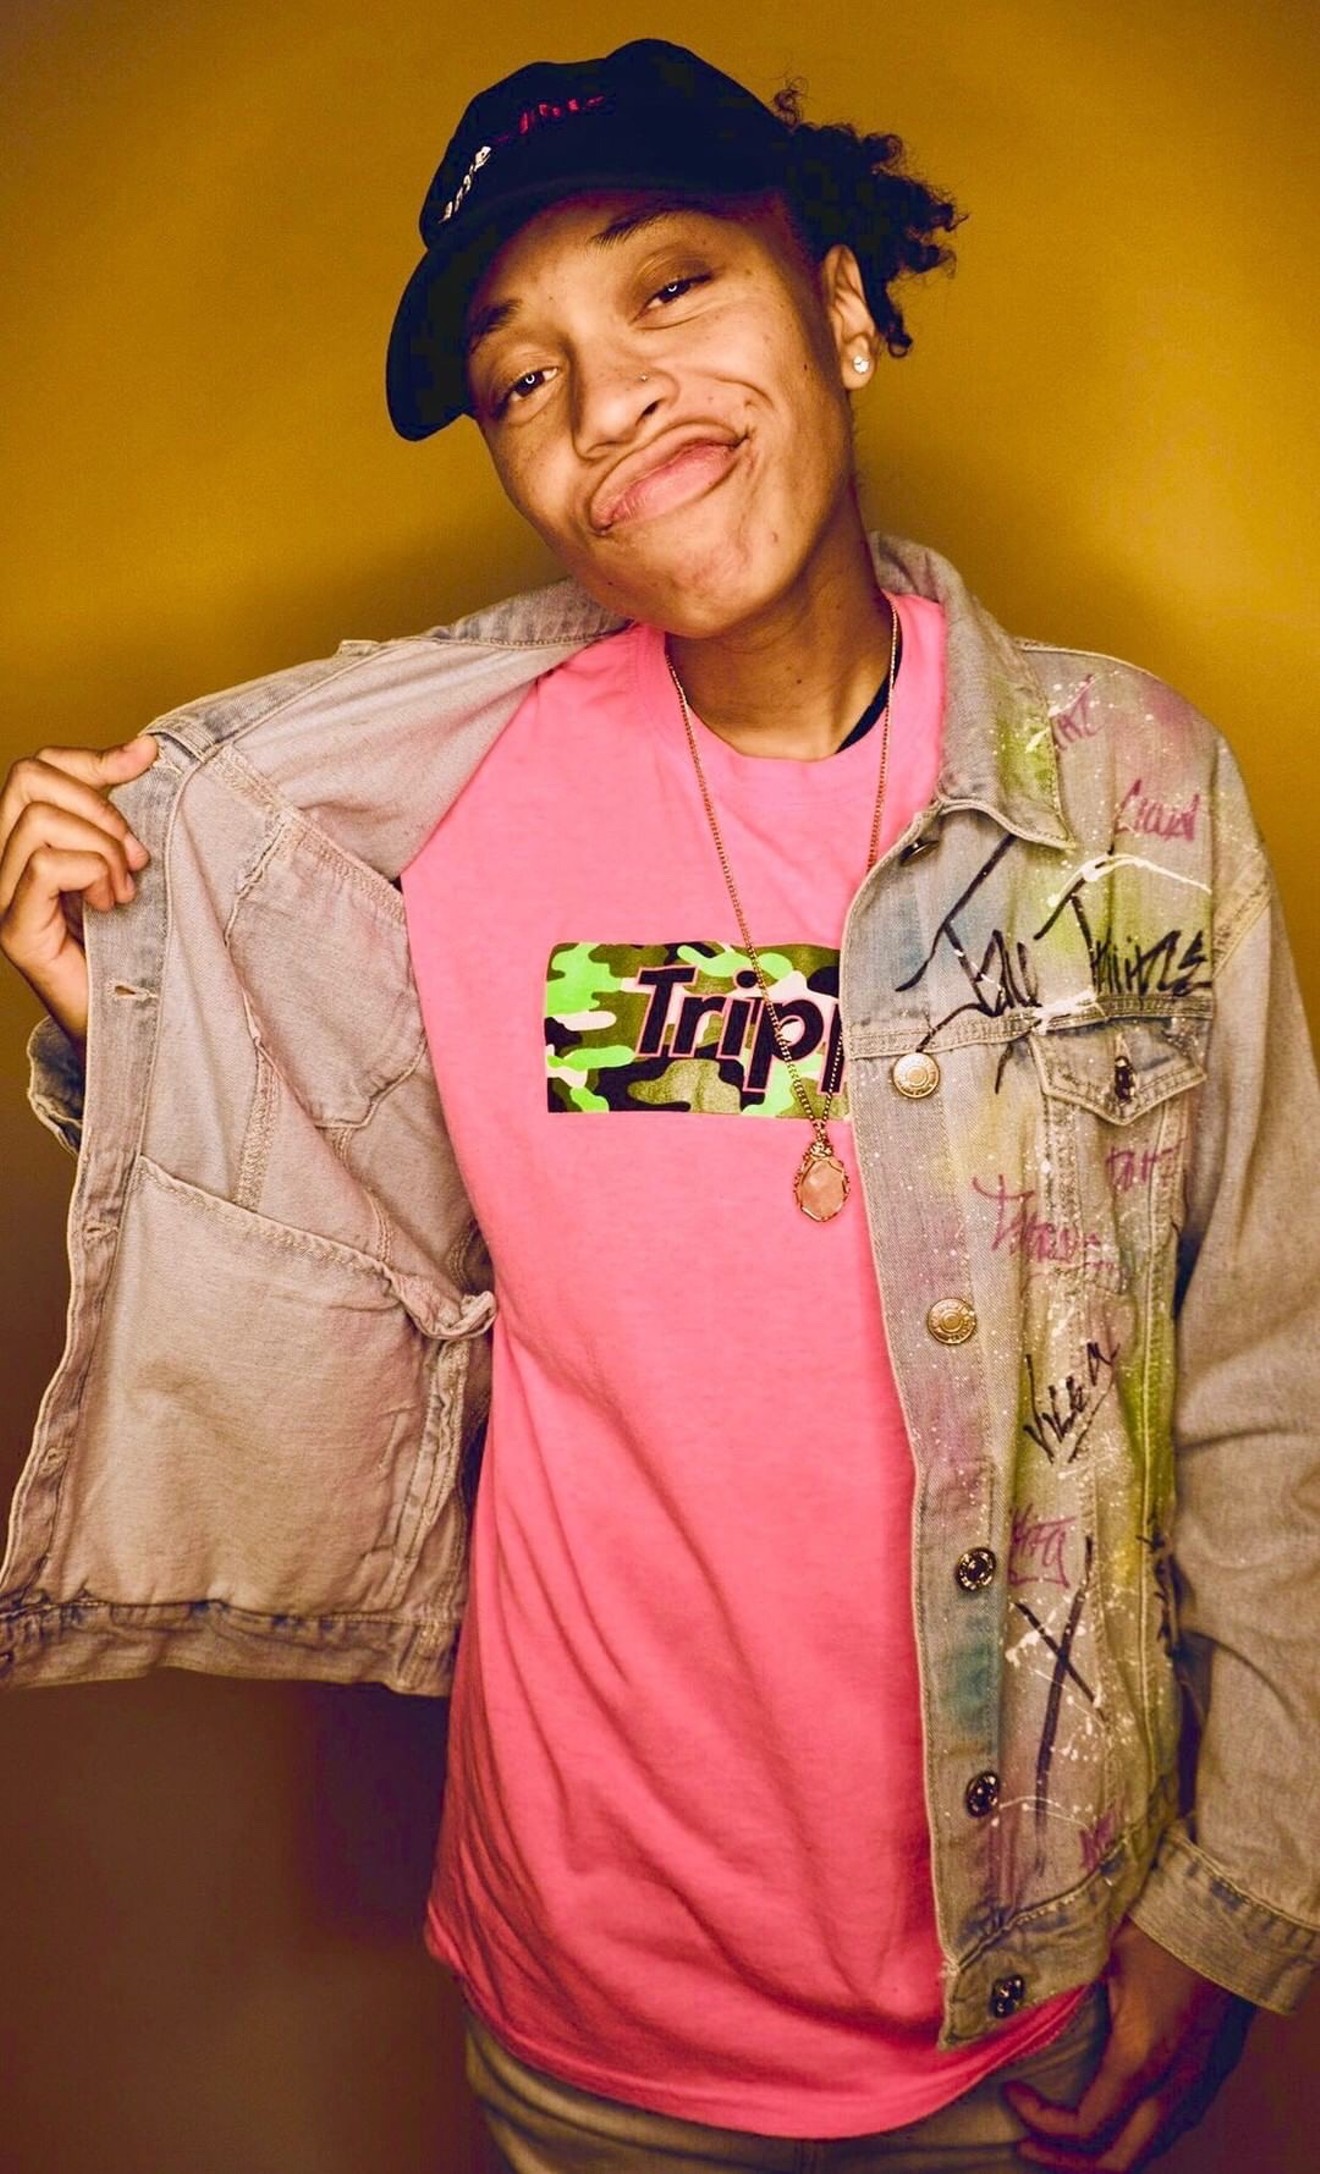 Denver-based rapper Jay Triiiple.